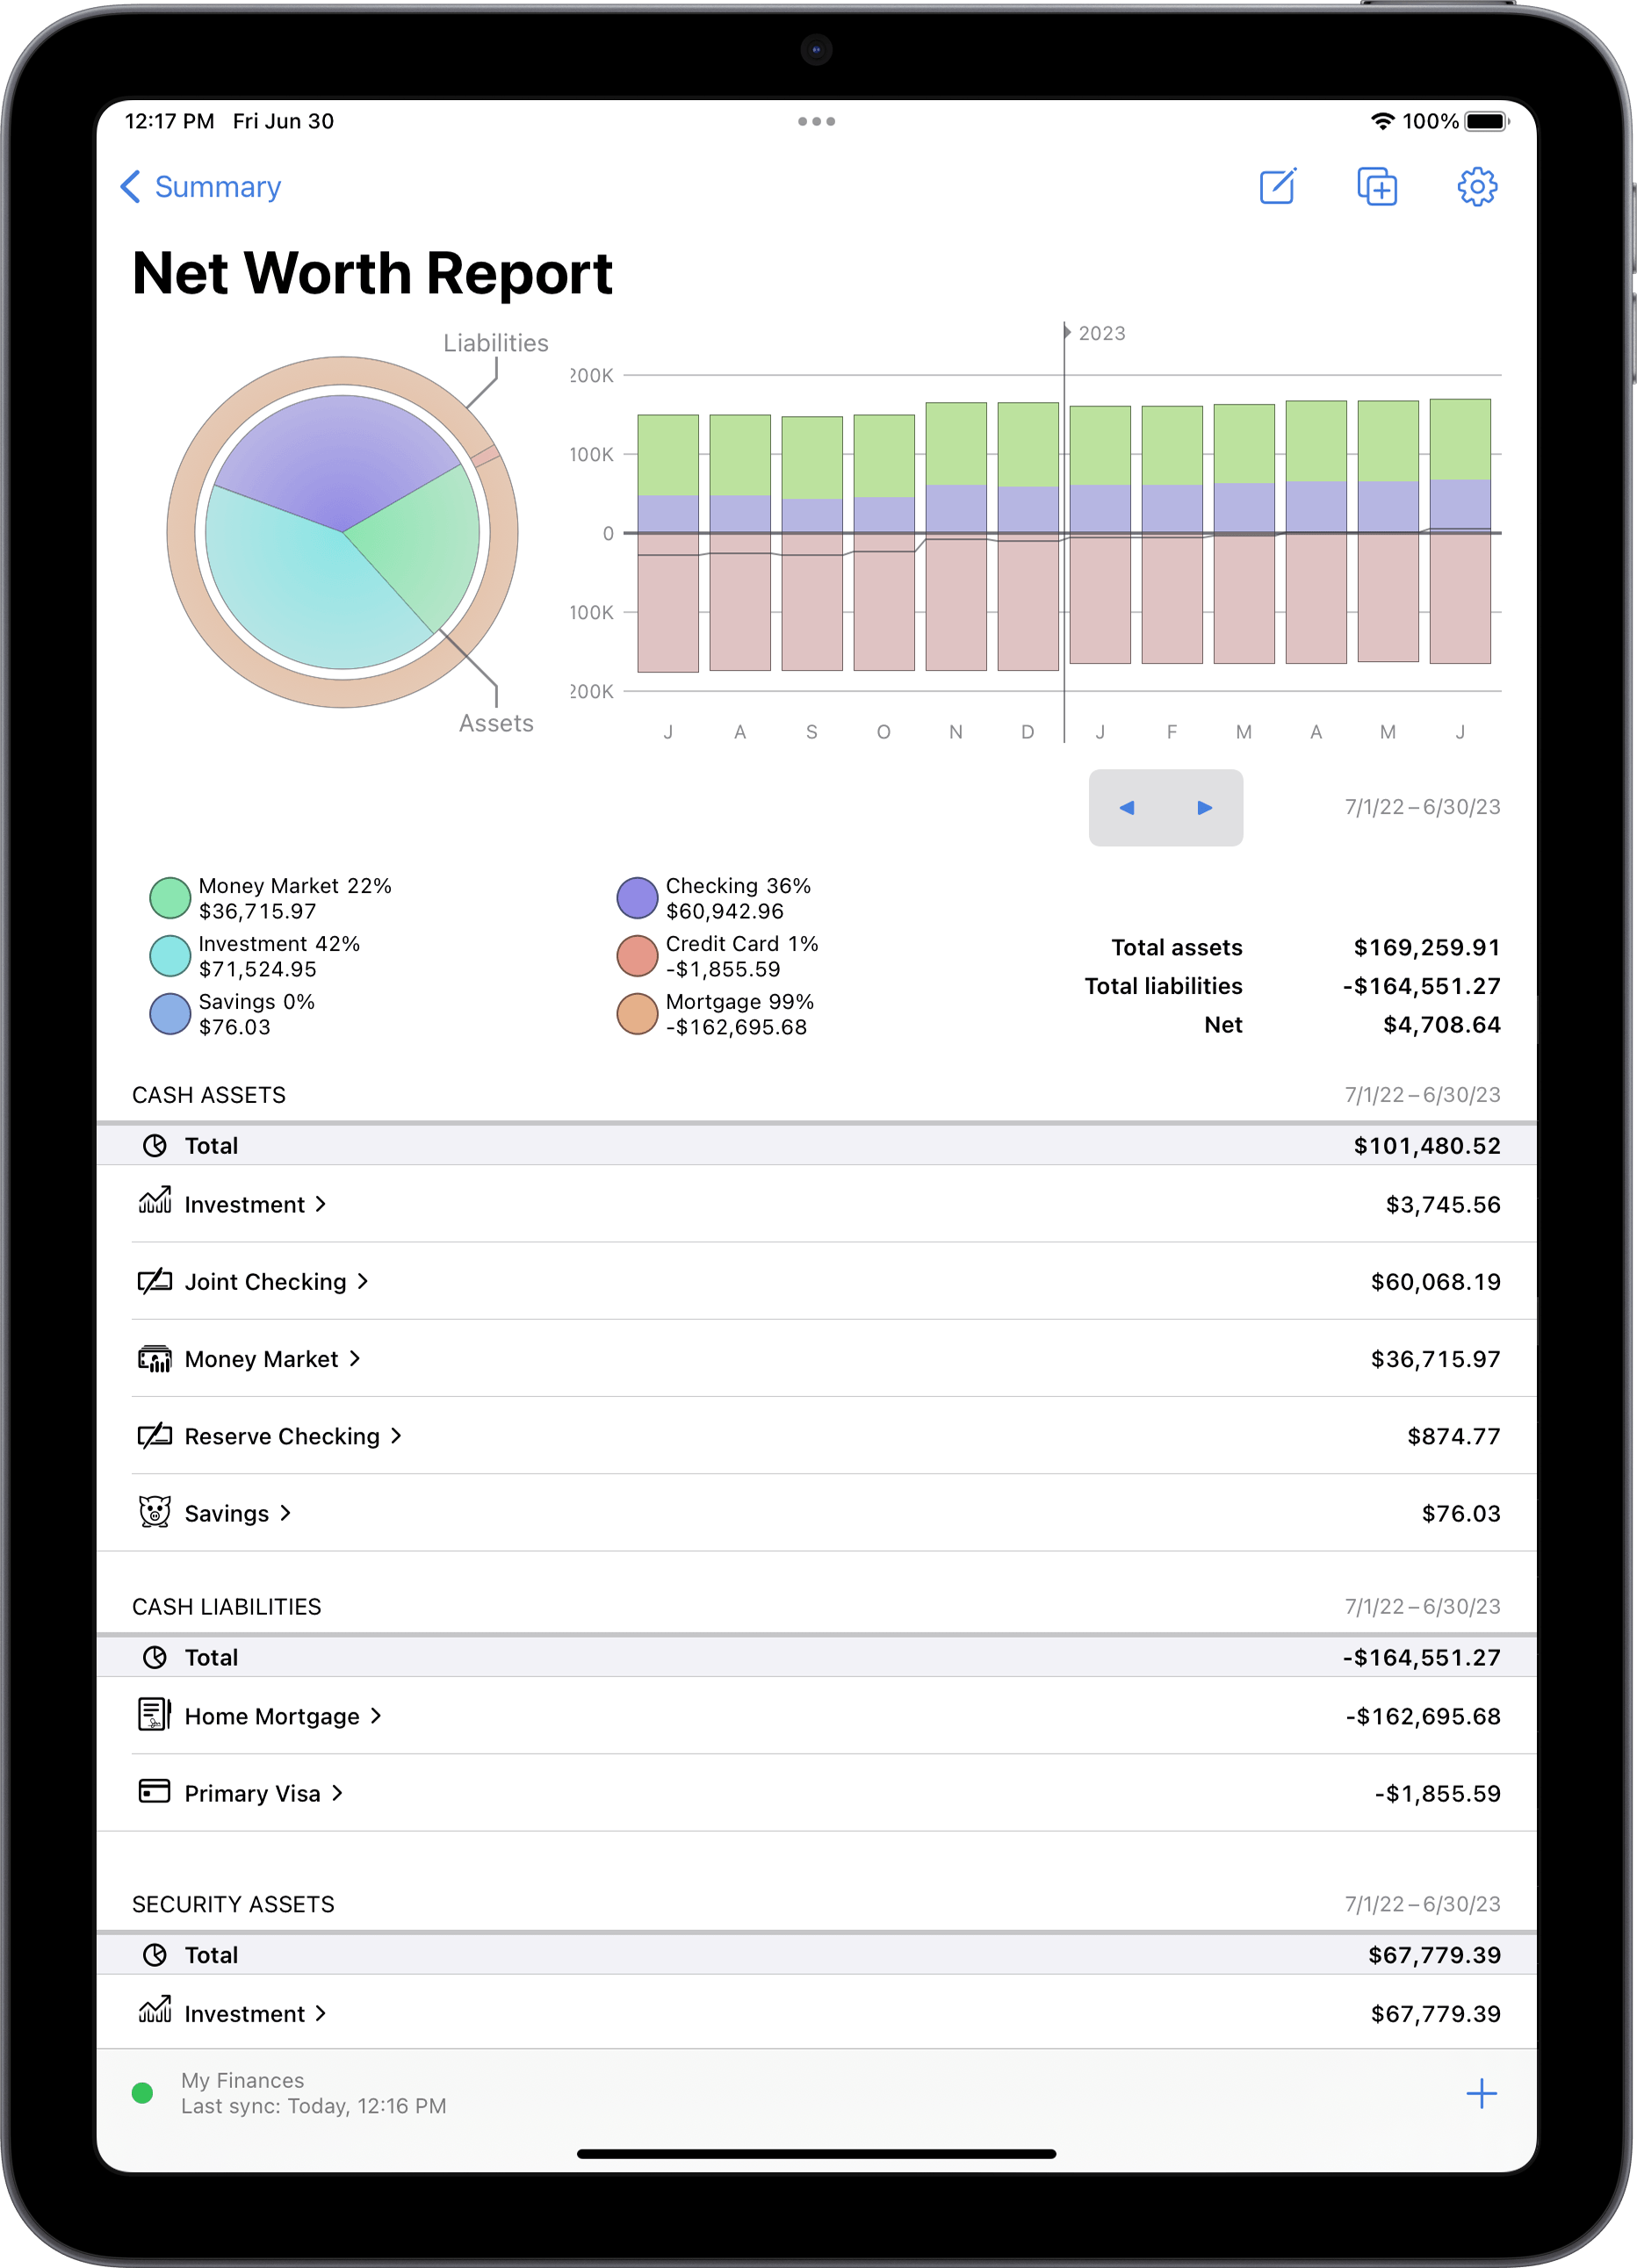 Net worth report in portrait mode on iPad